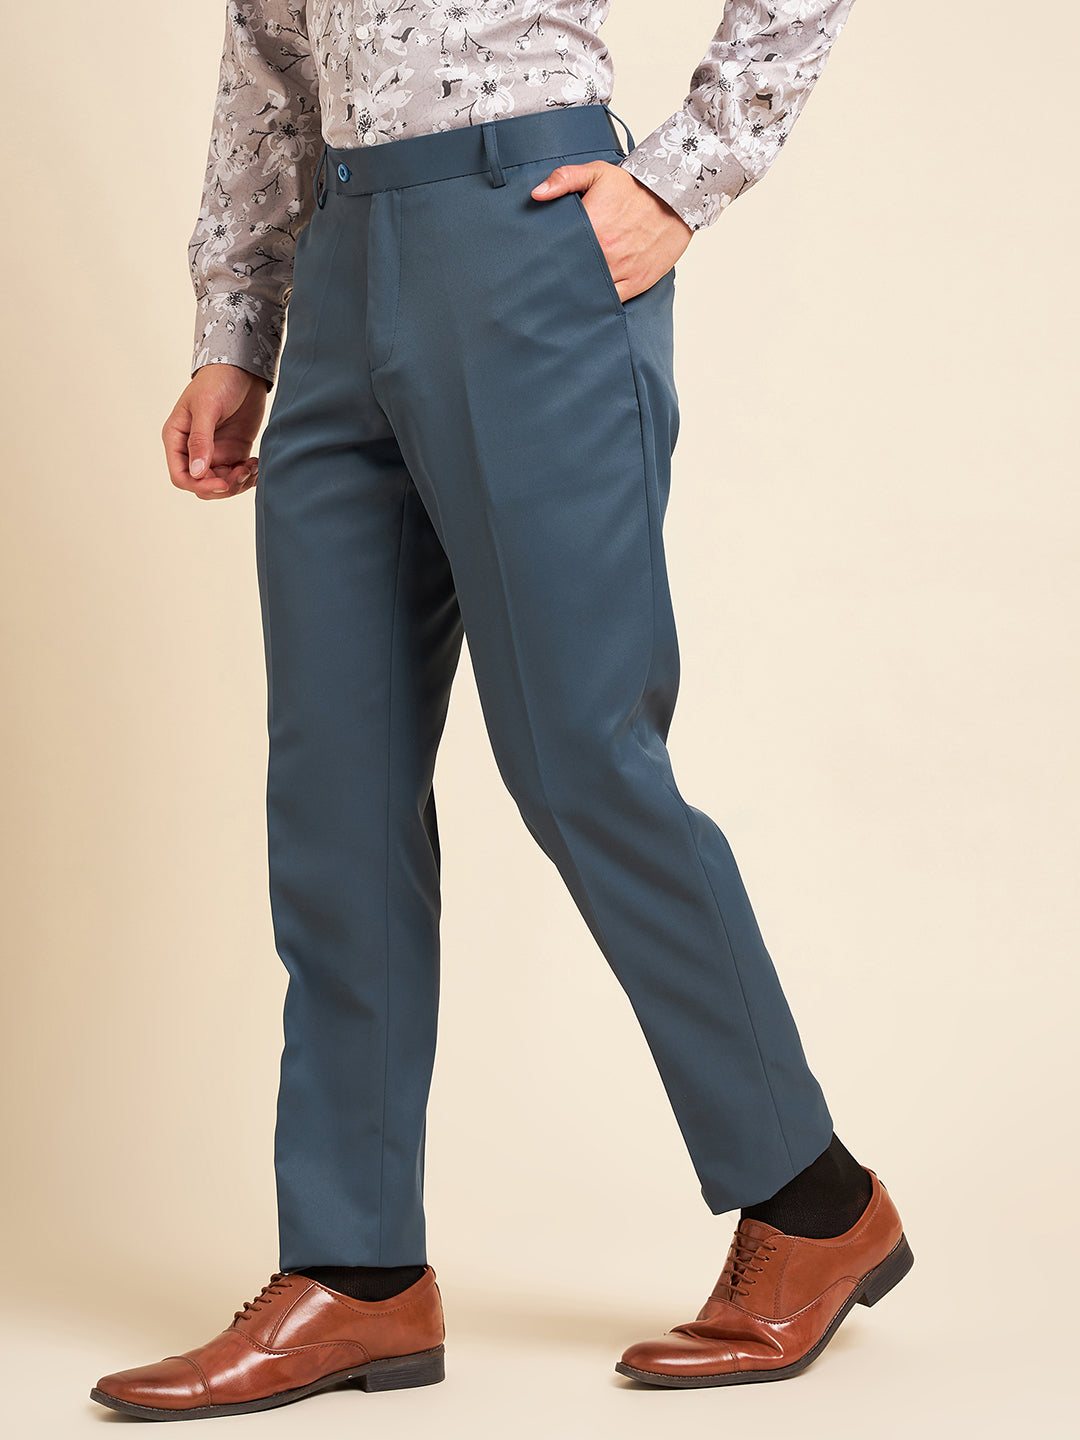 MODERNFMEN Mens Formal Business Smart Trousers Solid India  Ubuy